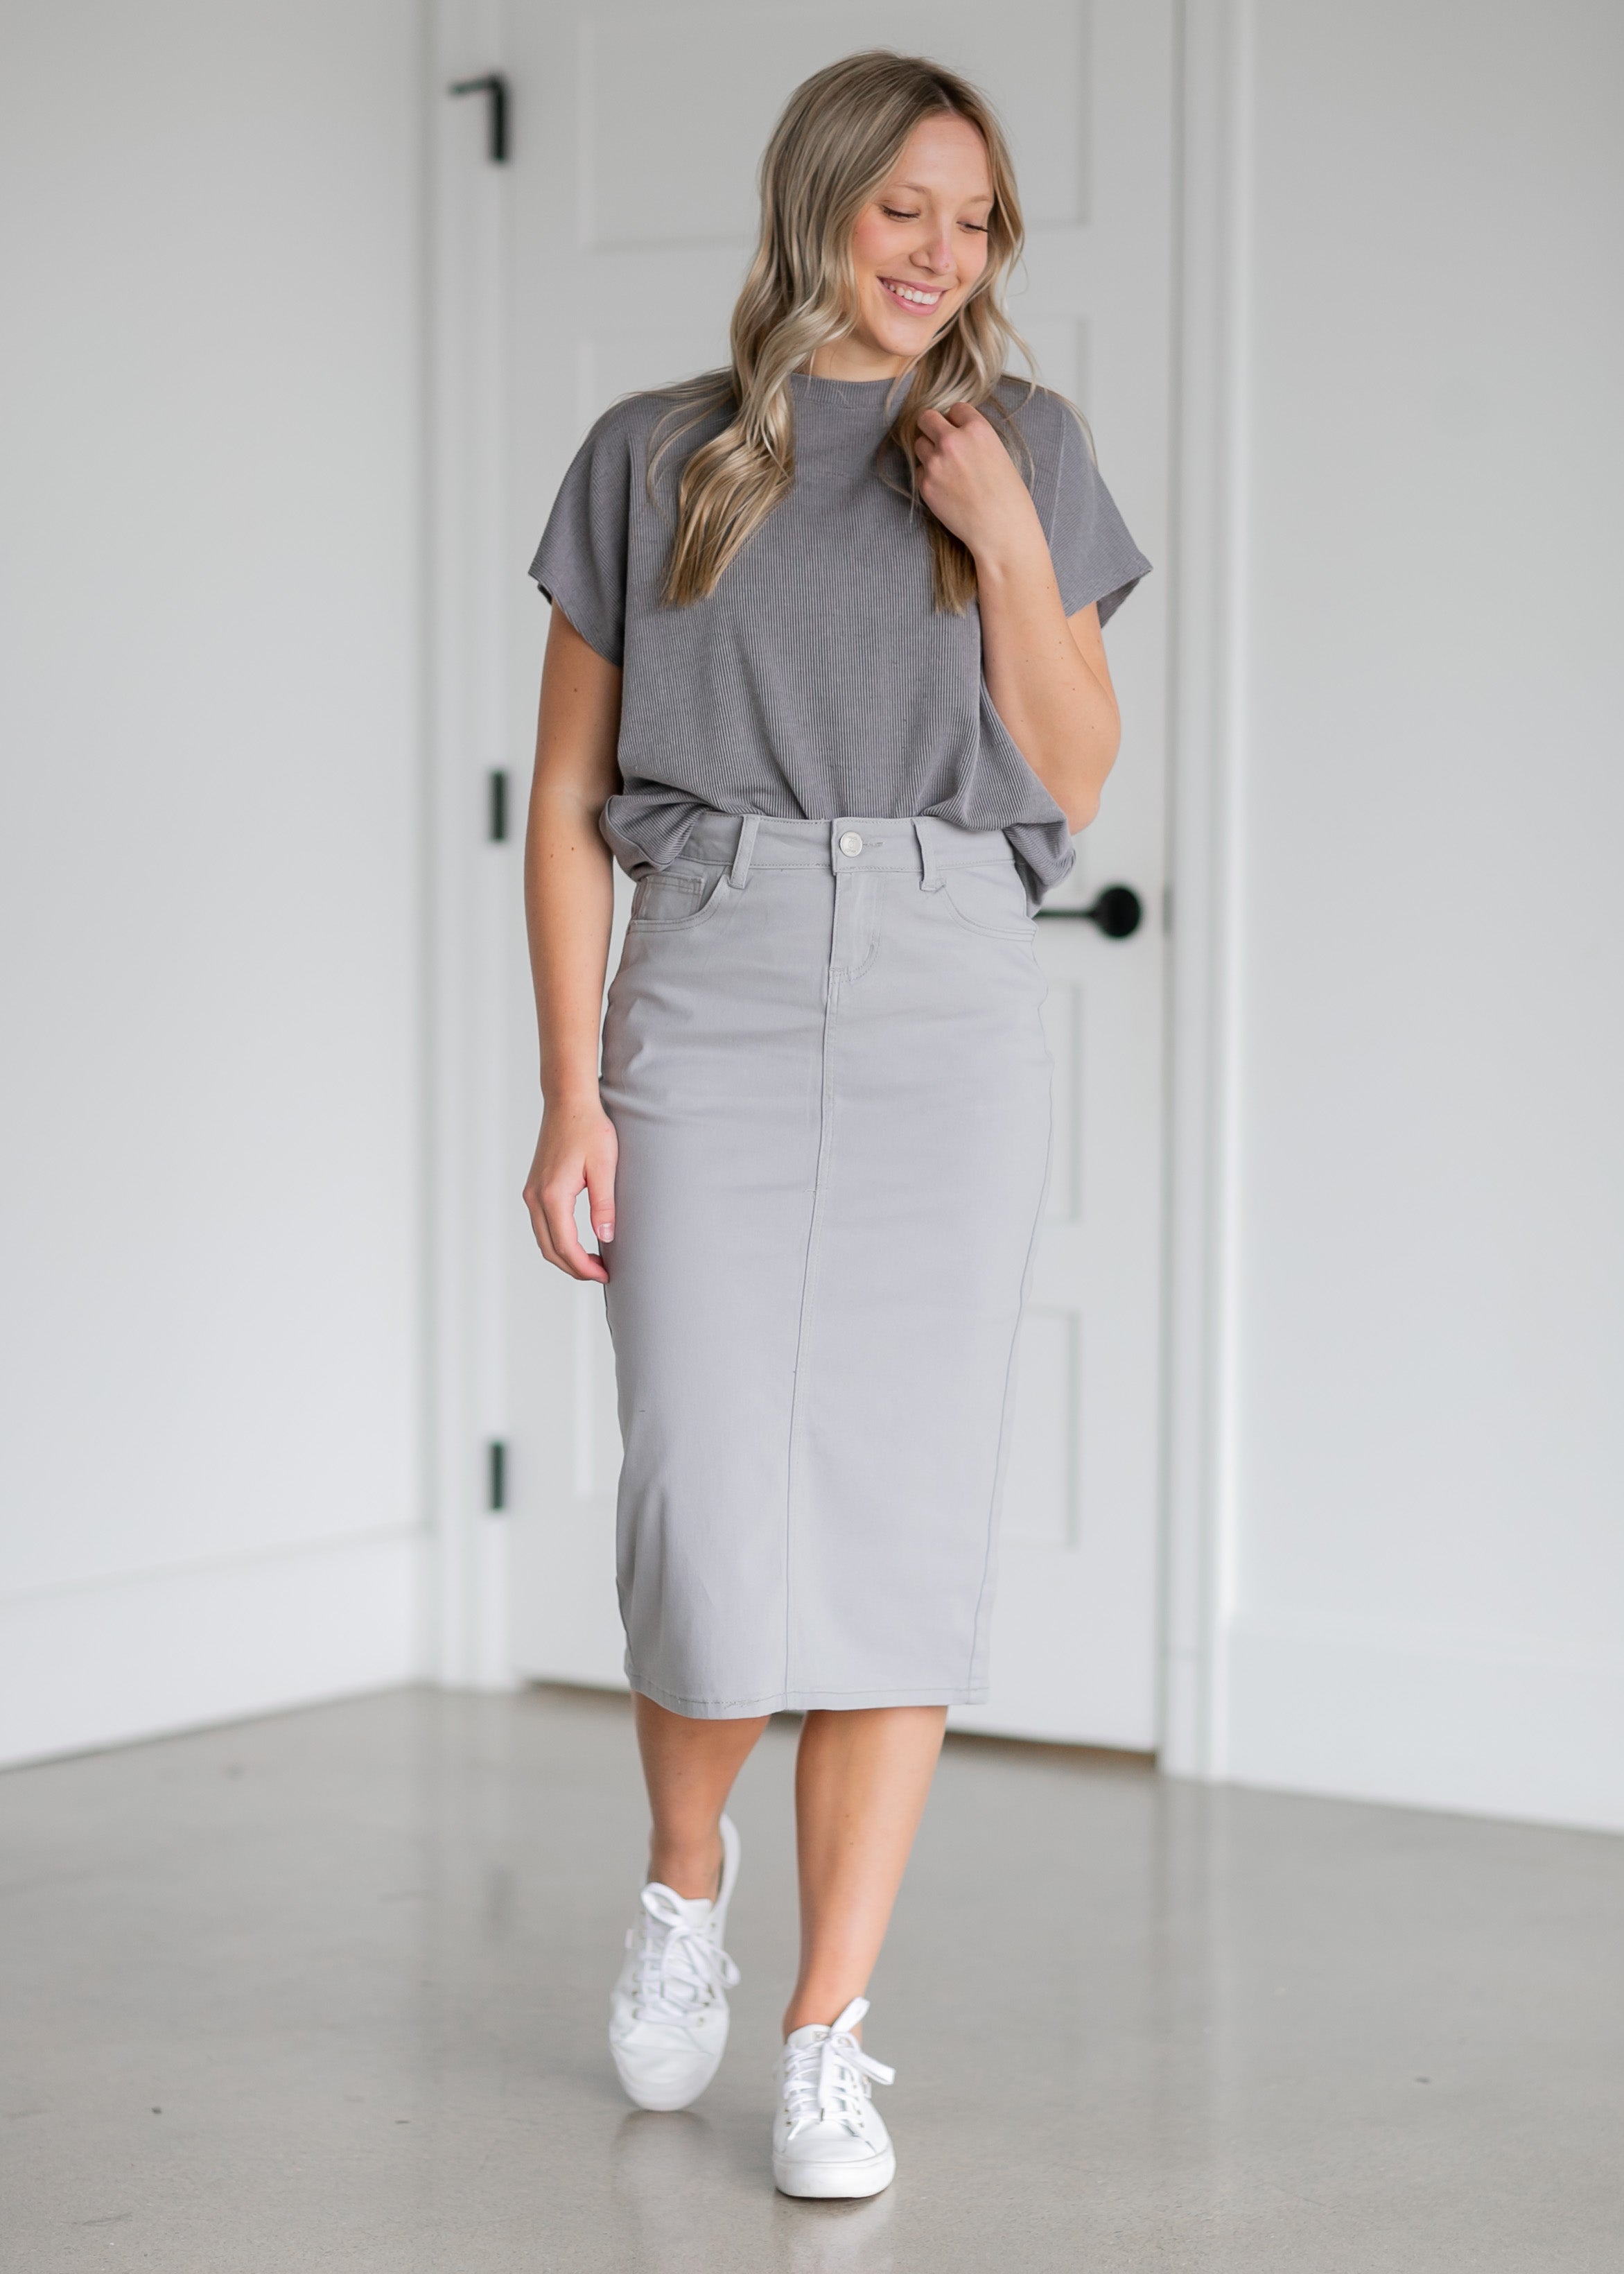 Country Road Size 10 S Grey Denim Pencil Skirt Australian Designer | eBay